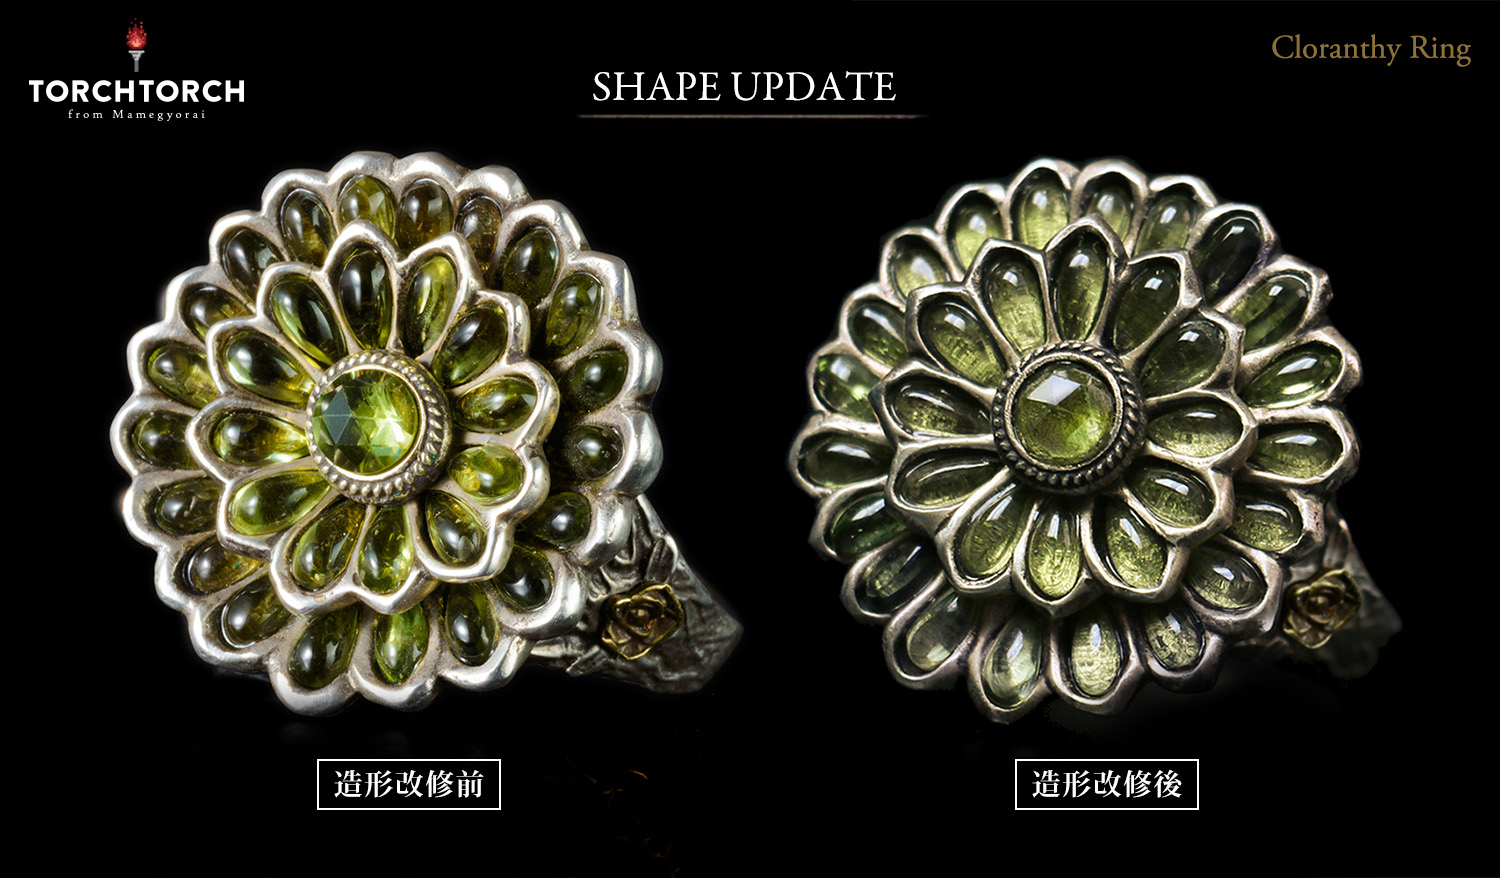 TORCH TORCH blog: ダークソウル/ リングコレクション: 緑花の指輪について